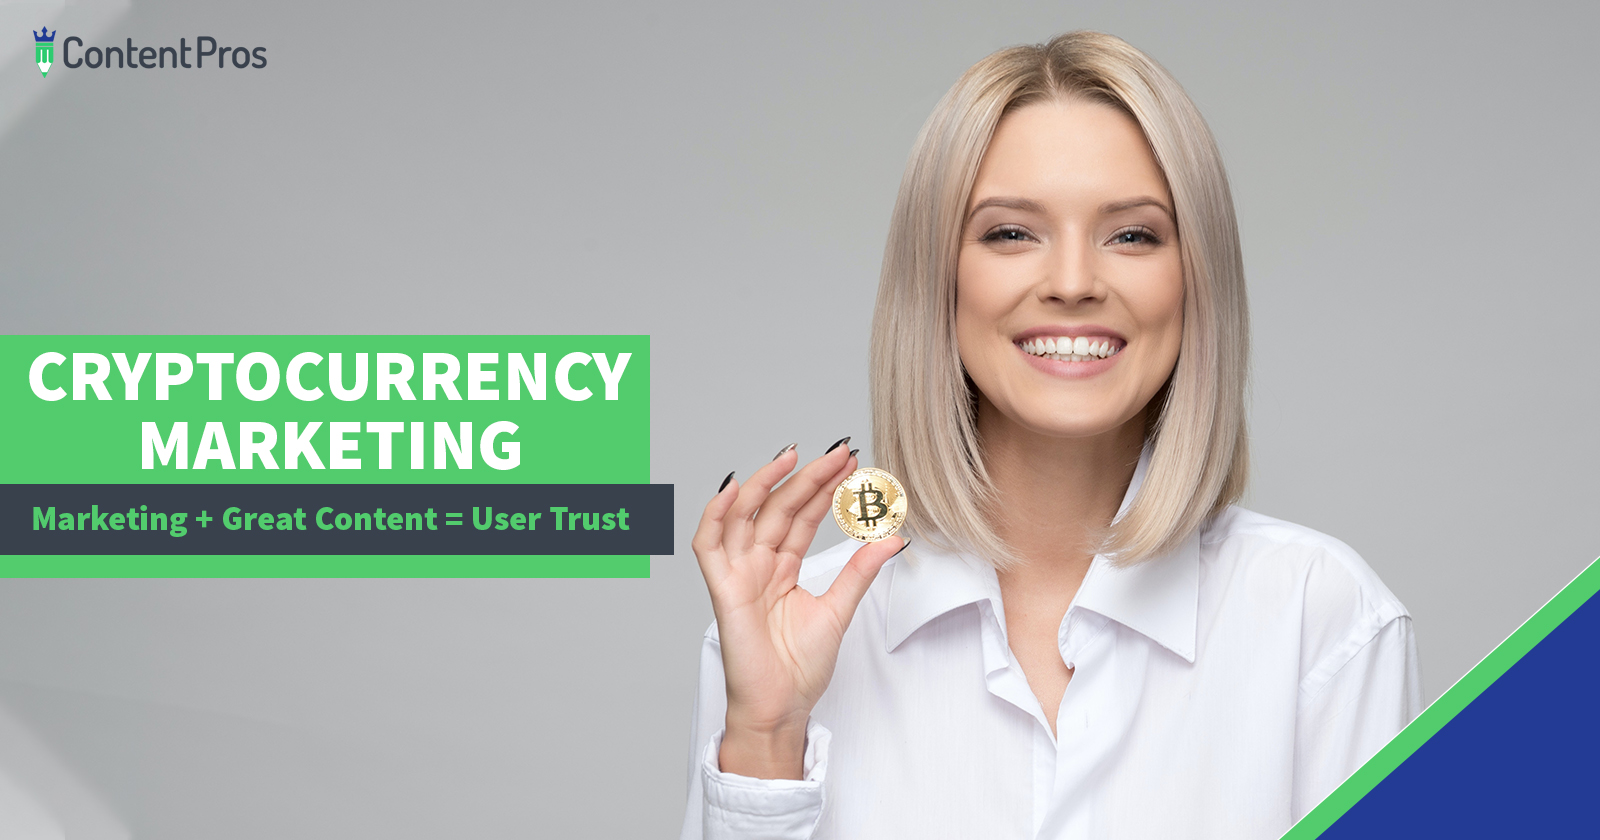 Cryptocurrency marketing creates user trust